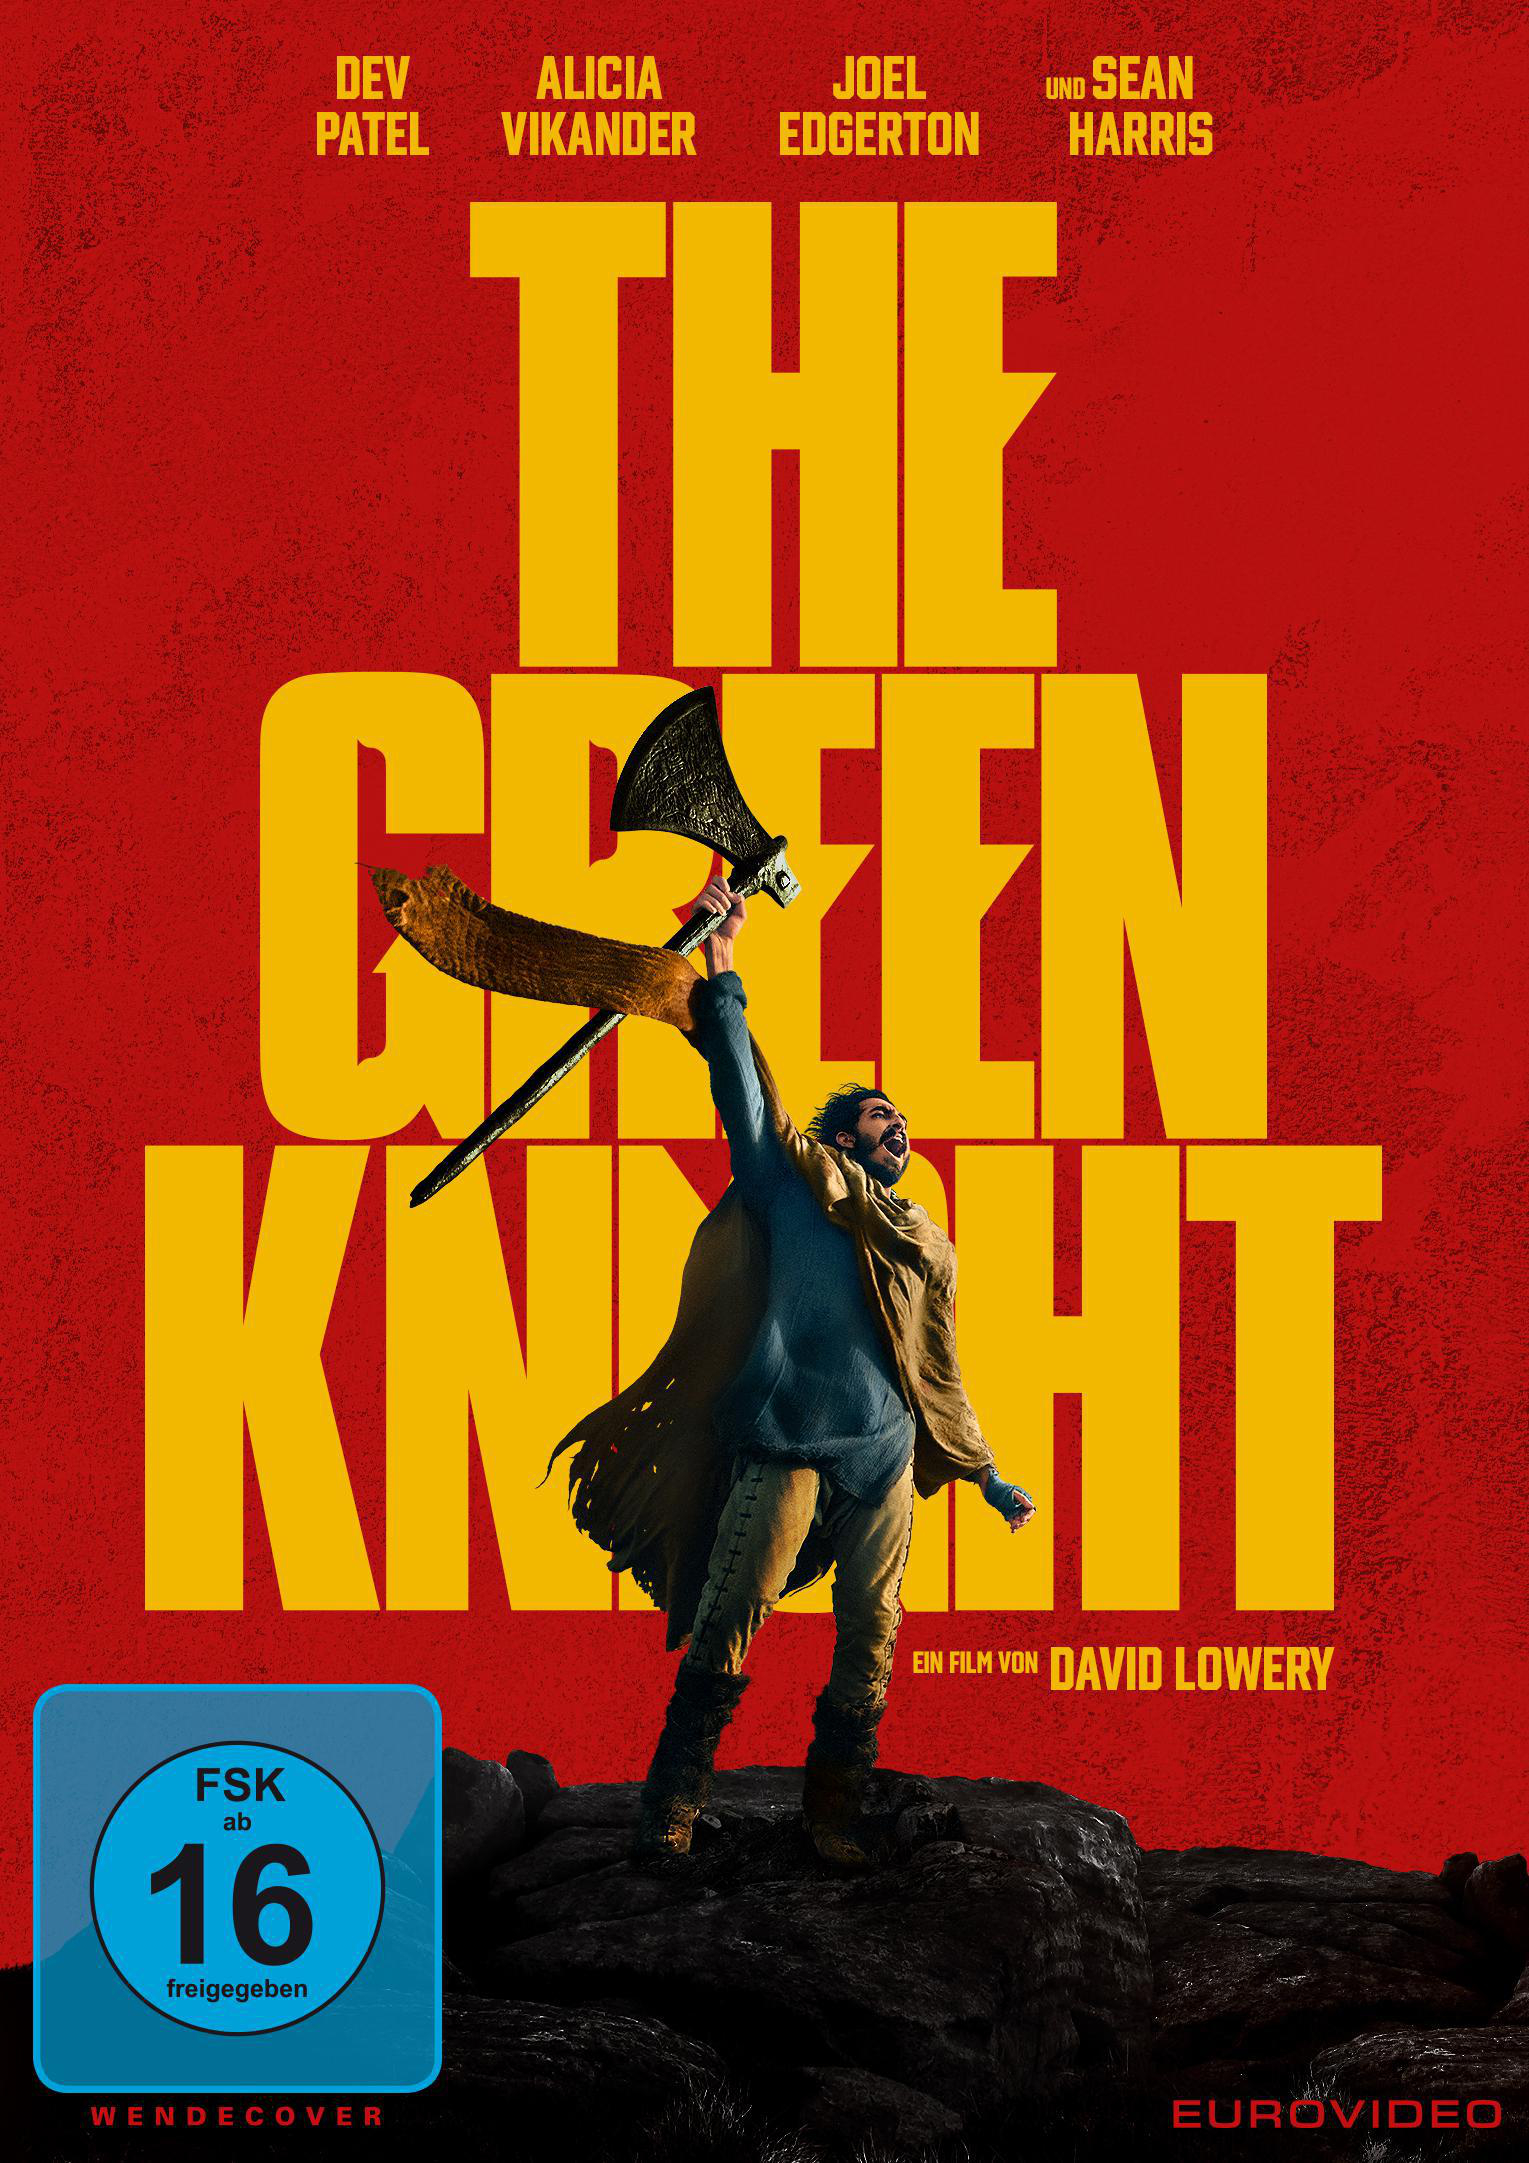 KNIGHT THE DVD GREEN